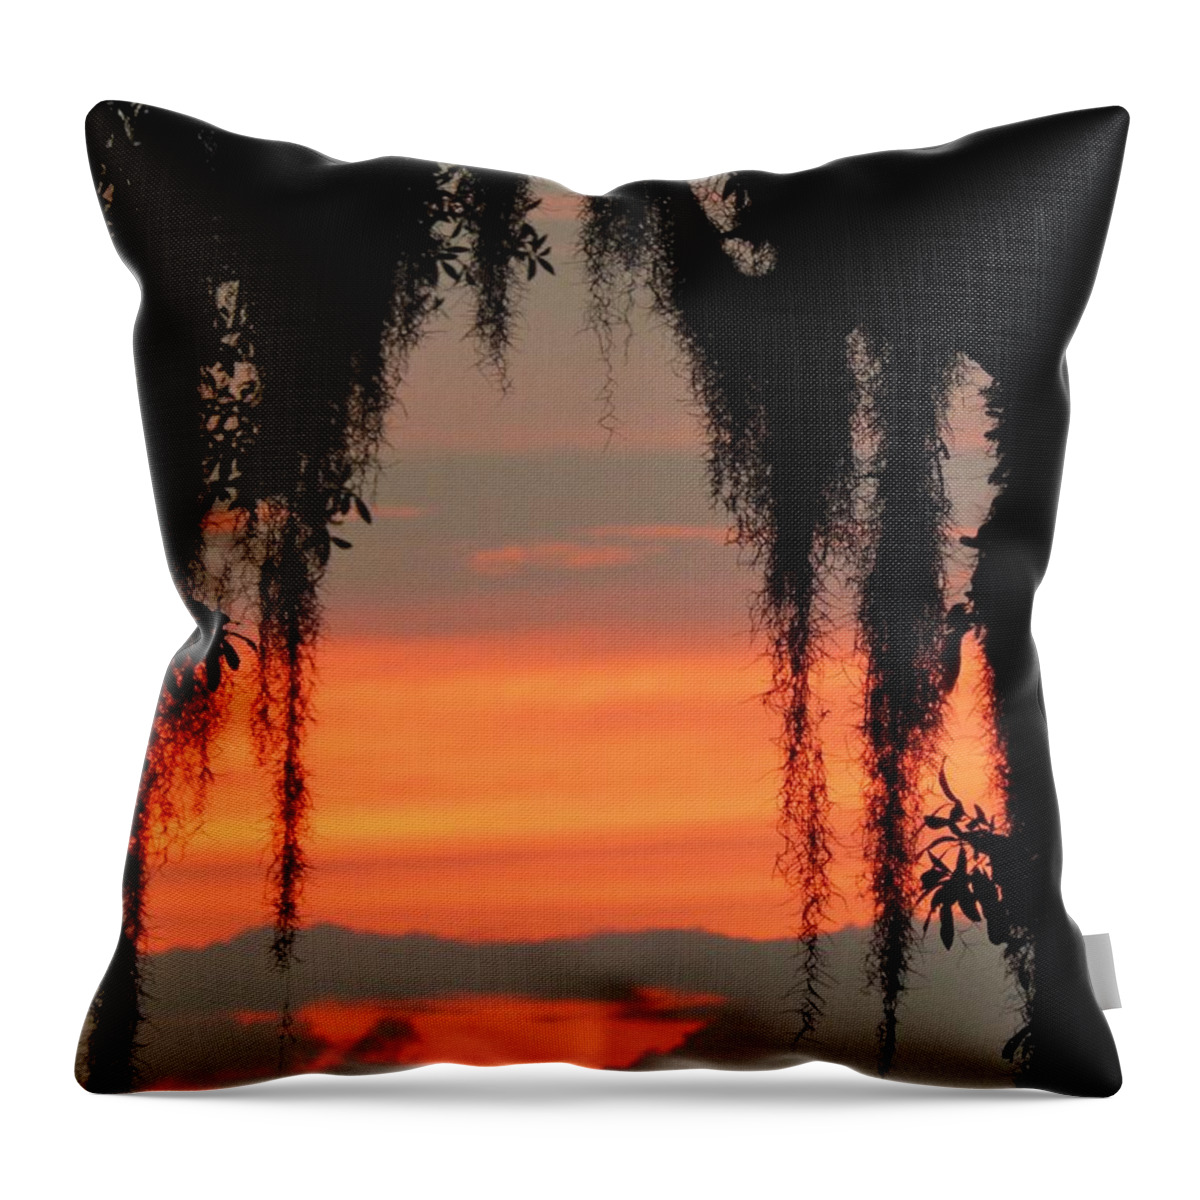 Sunset Throw Pillow featuring the photograph Sunset Through The Moss by Jan Gelders